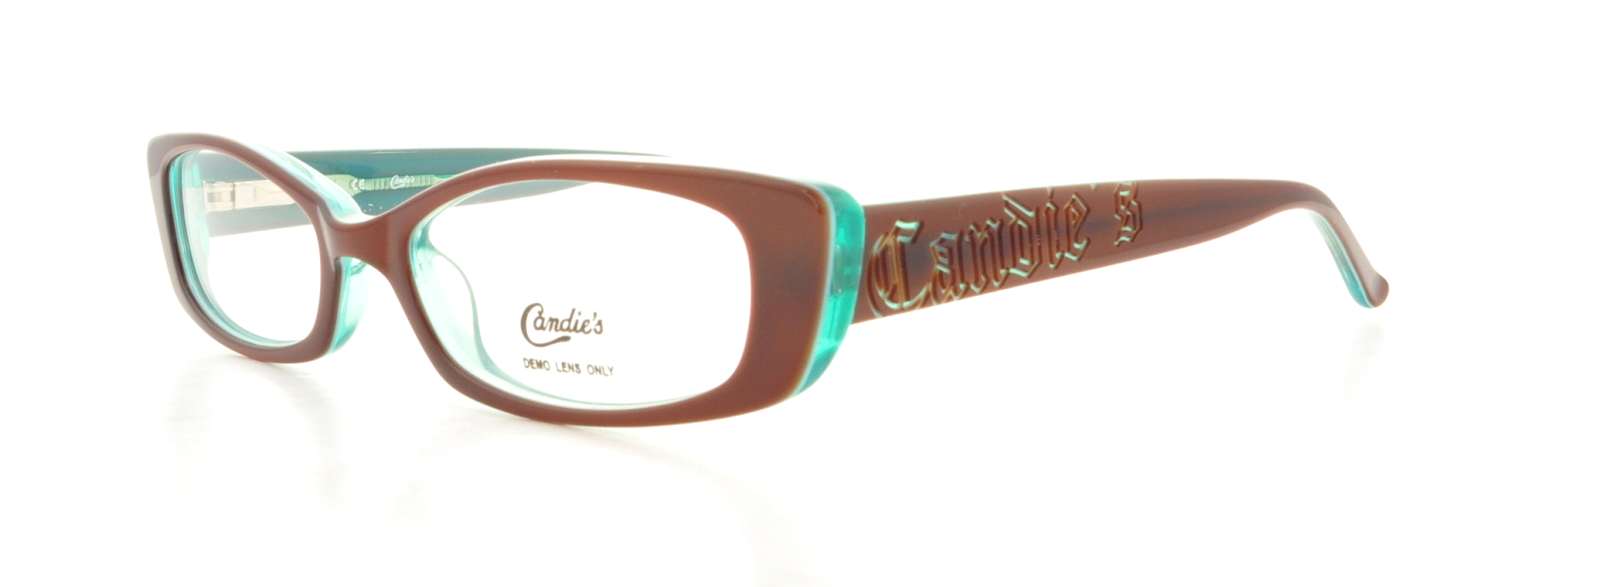 Picture of Candies Eyeglasses C TONI